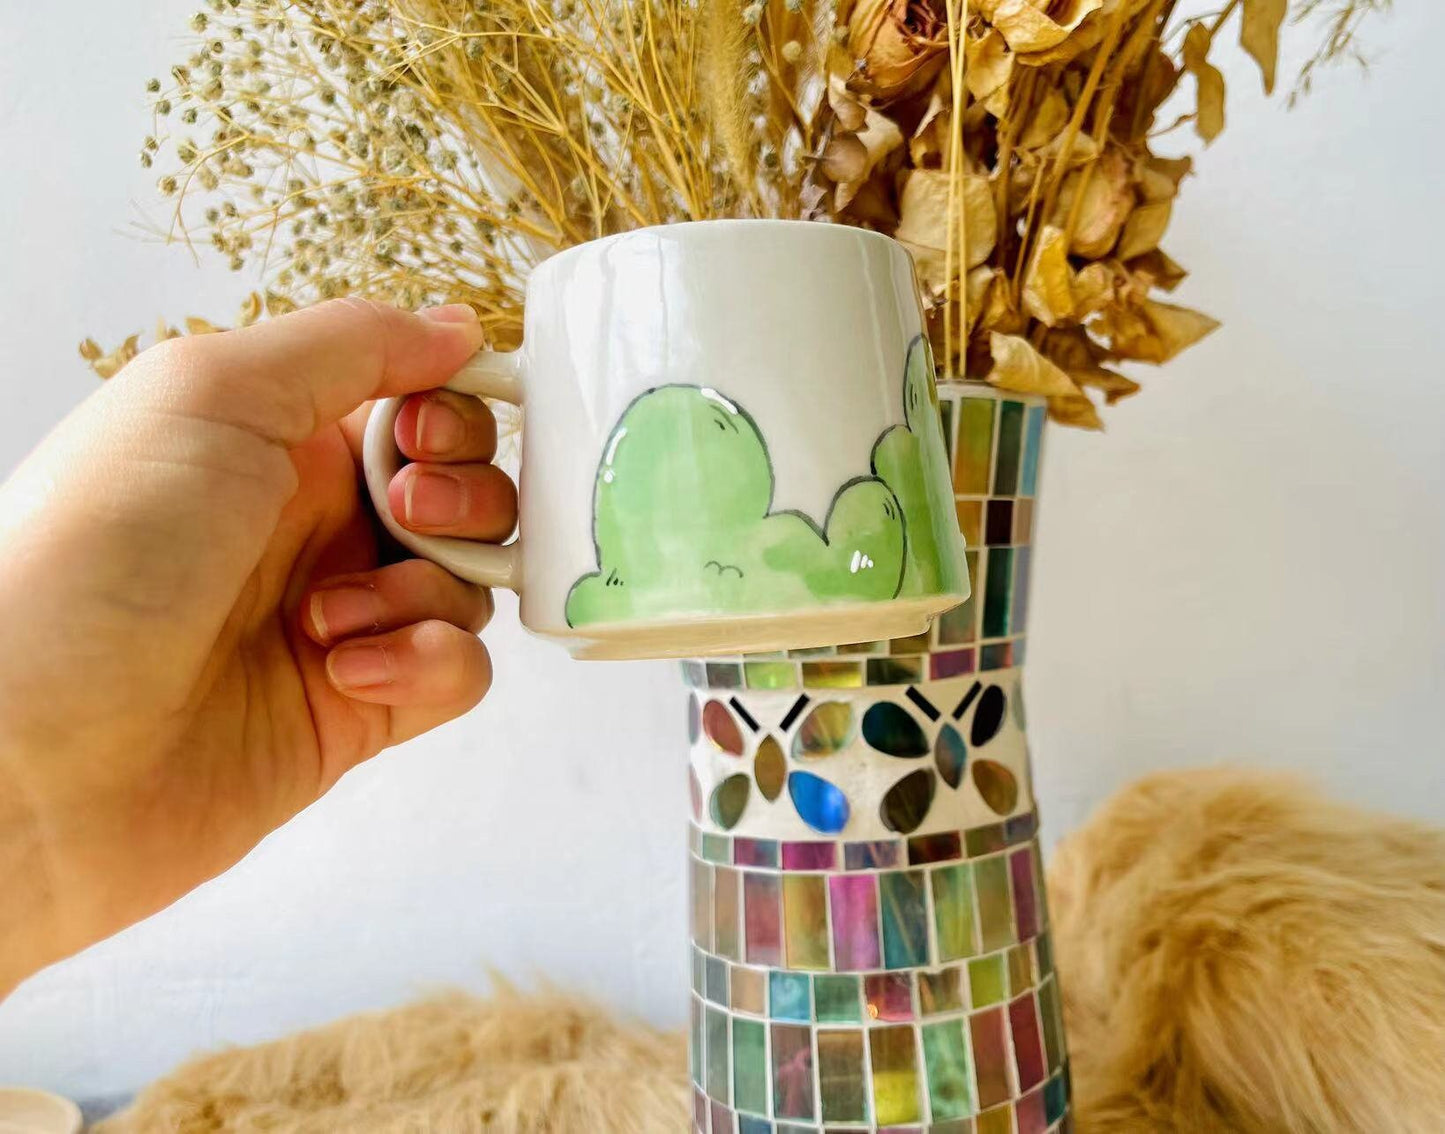 Adorable Plants Designs Hand-painted Ceramic Mug, Personalized Handmade Ceramic Cup